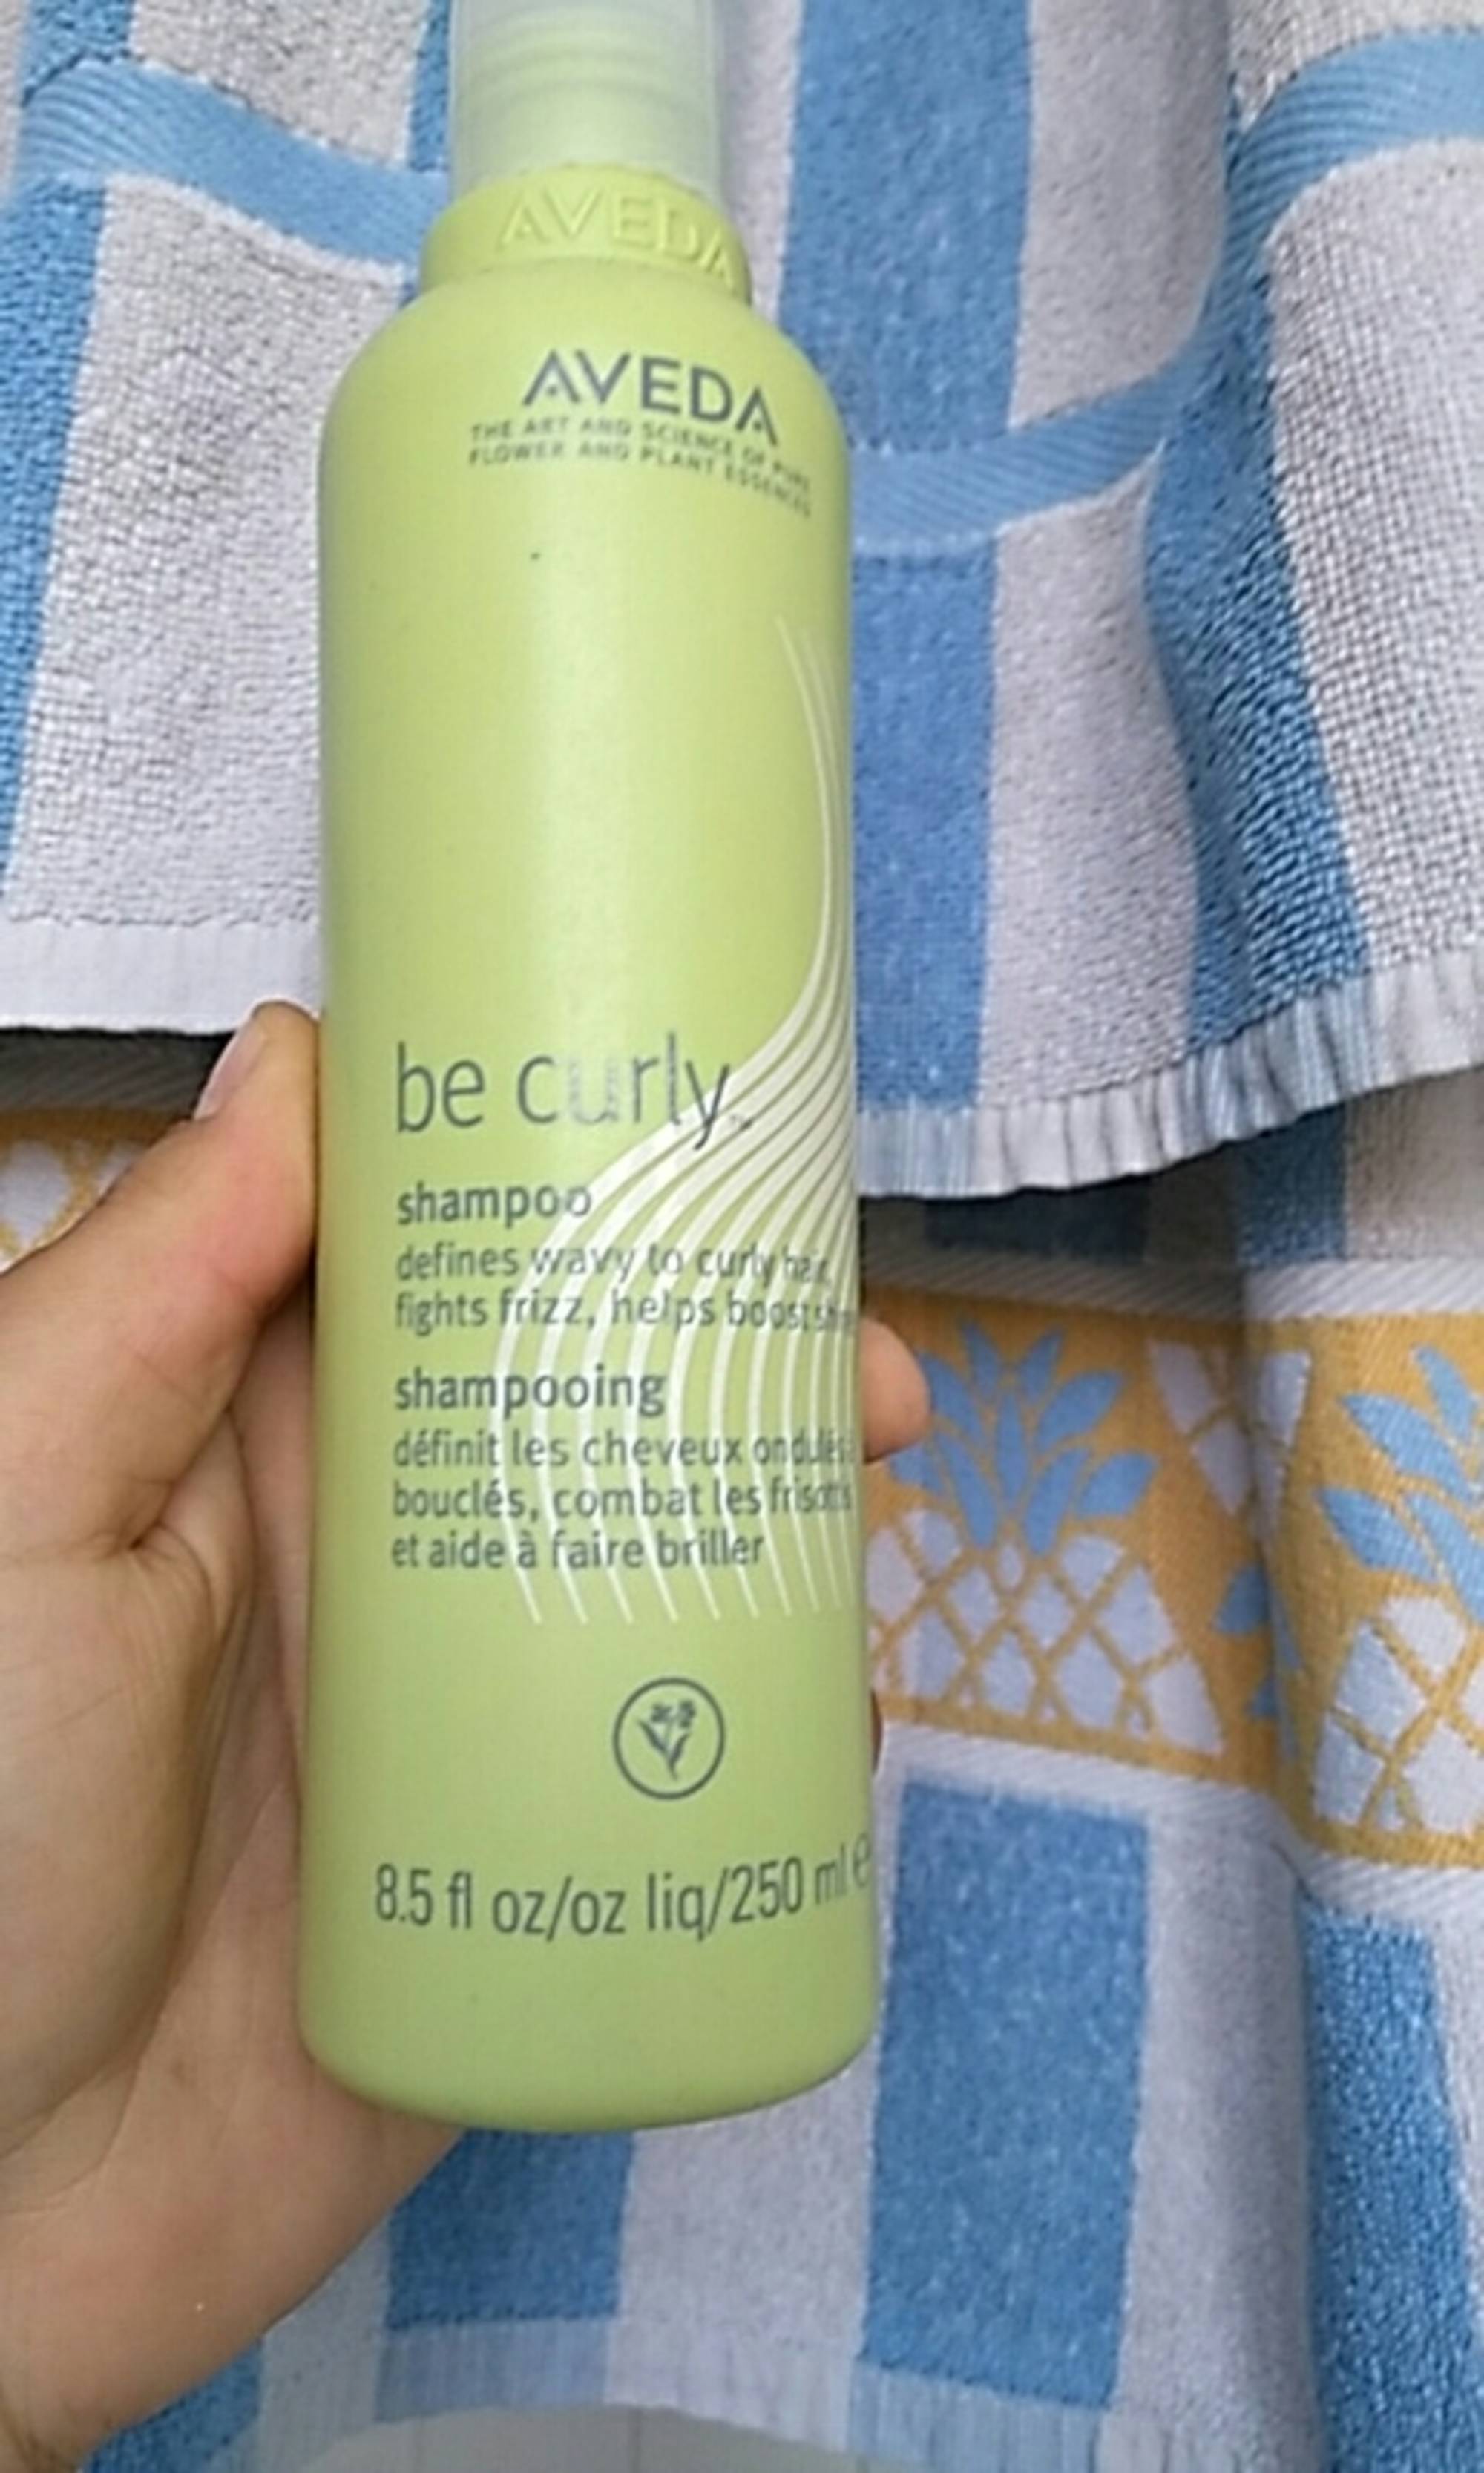 AVEDA - De curly shampoo